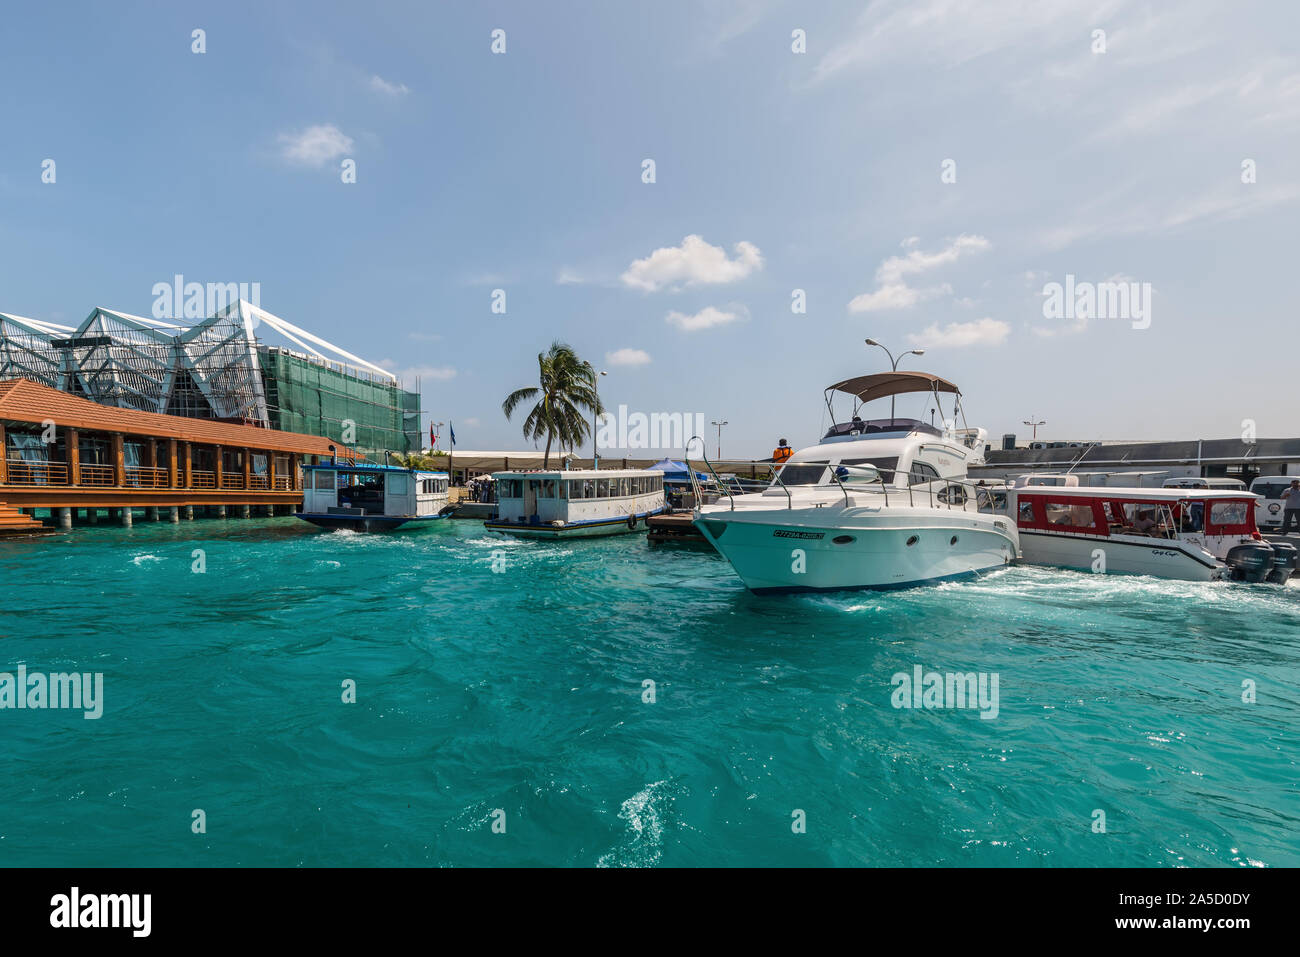 Hulhule Island, Maldives - November 18, 2017: Speed boat at the Hulhule port near Ibrahim Nasir International Airport, Maldives, Indian Ocean. Stock Photo